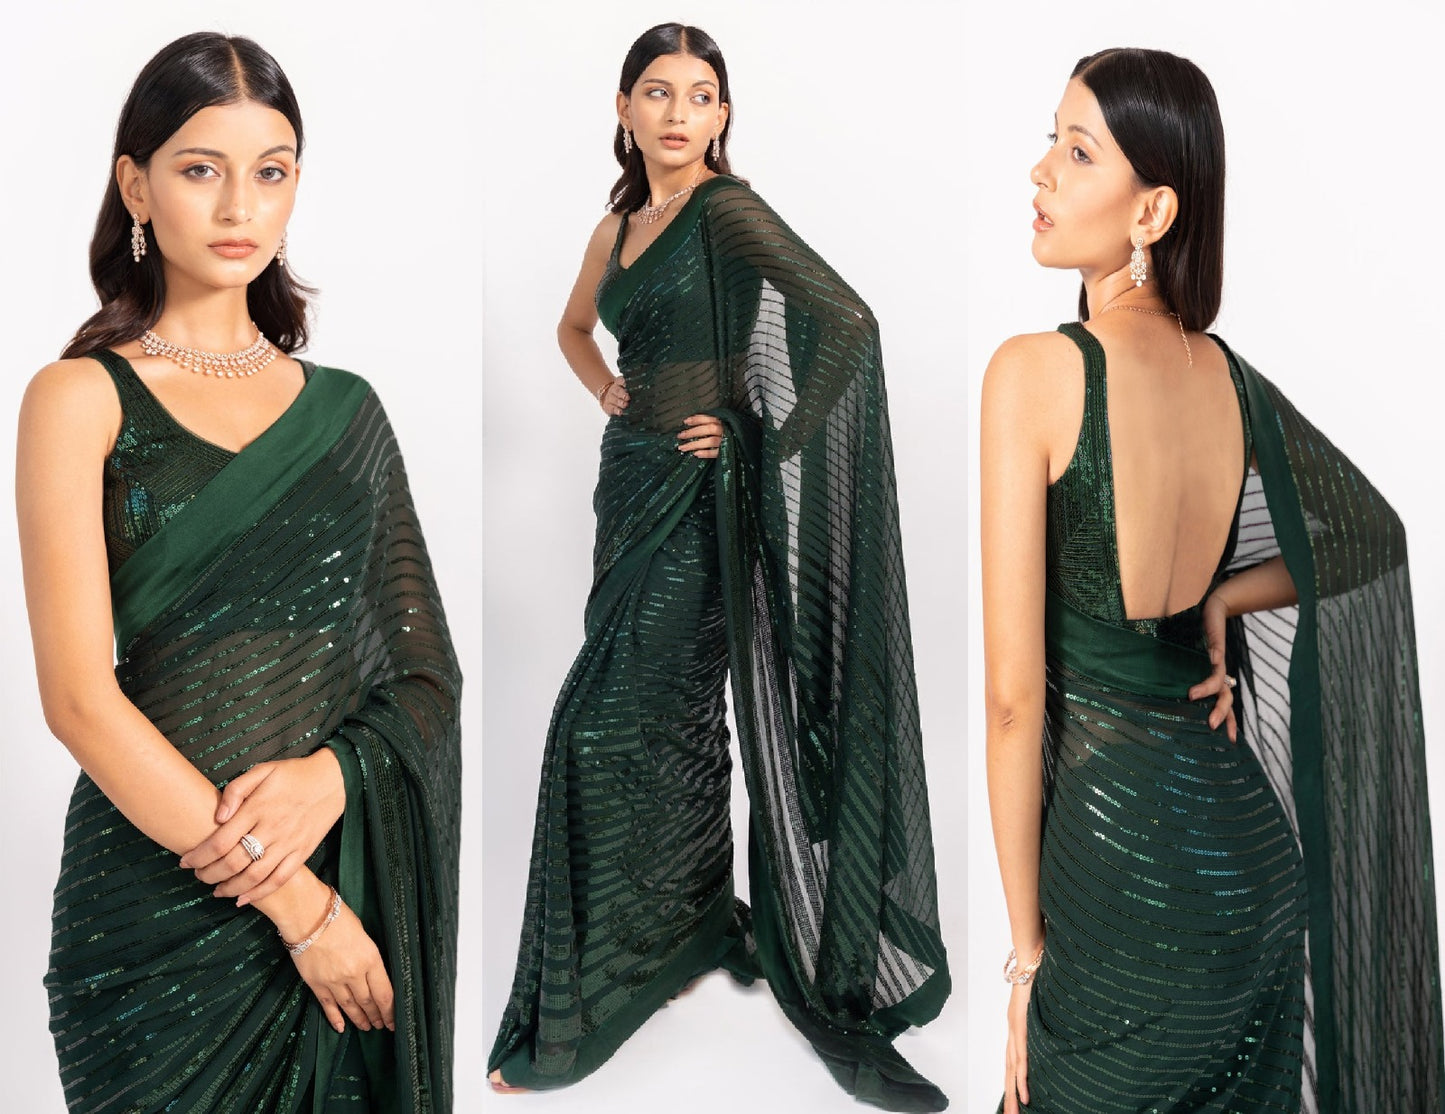 Women  Embellished Georgette Regular Sari with Blouse Piece